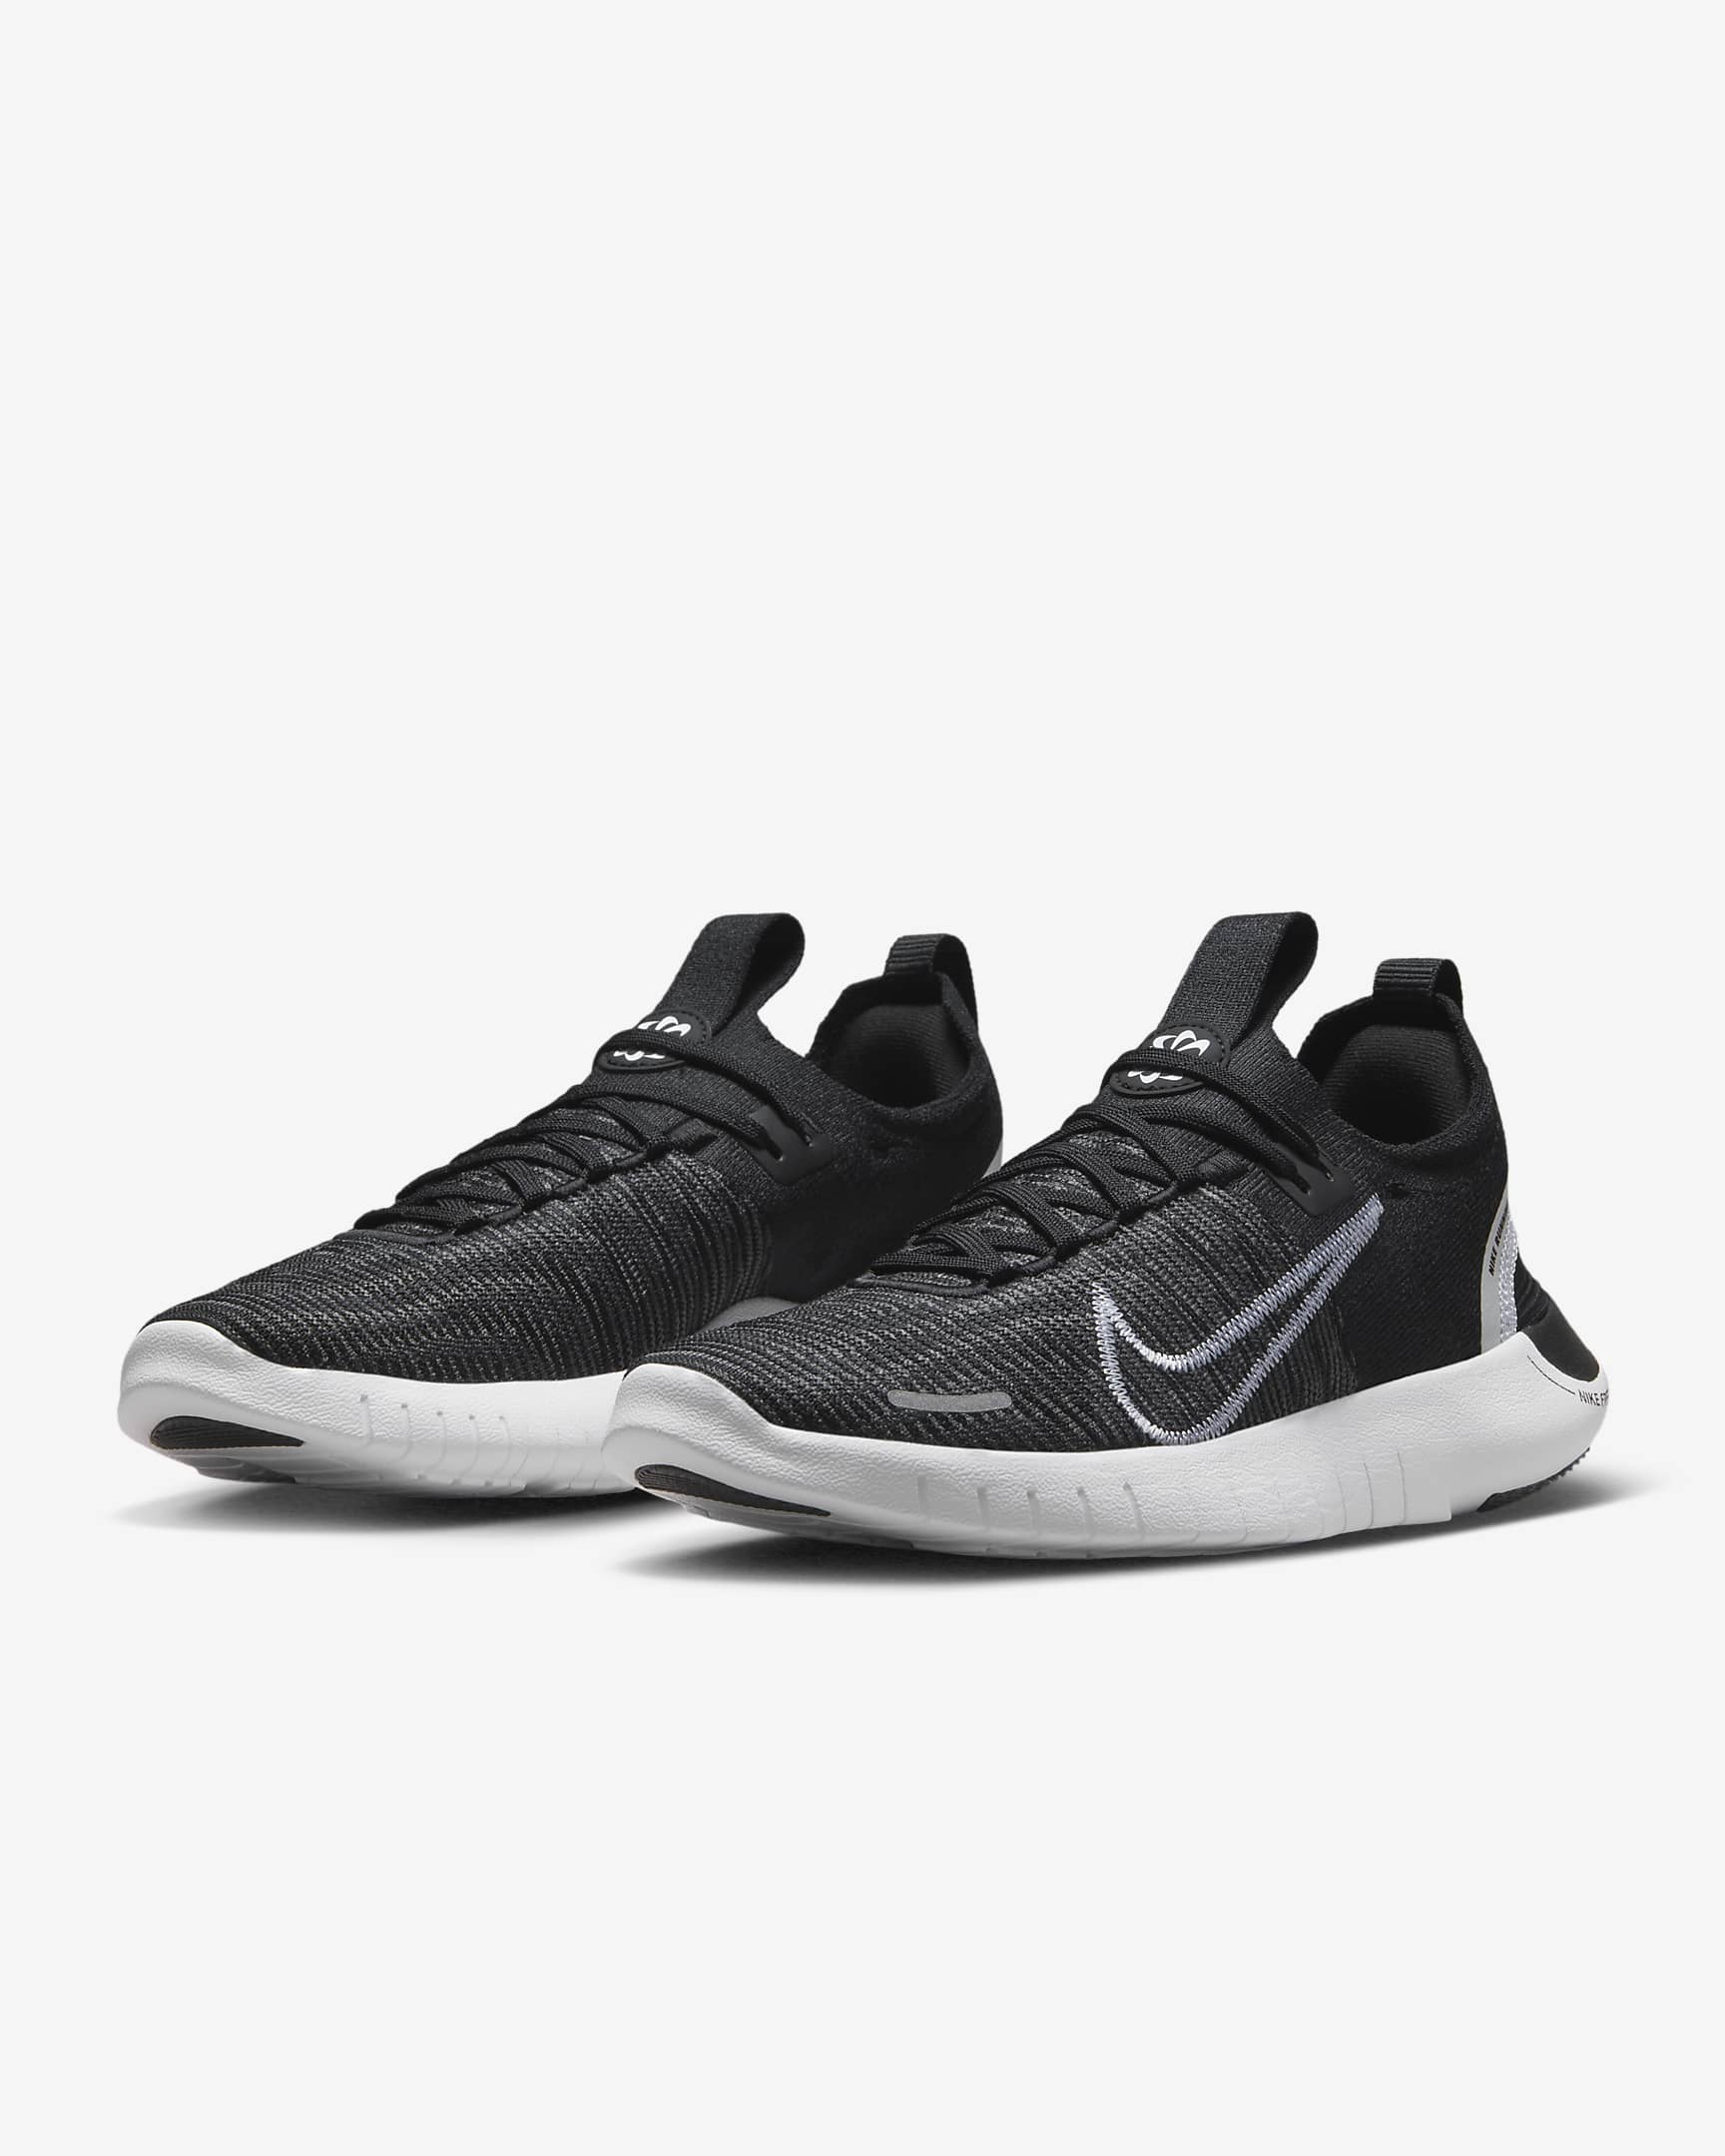 Nike Free RN NN Women's Road Running Shoes - Black/Anthracite/White